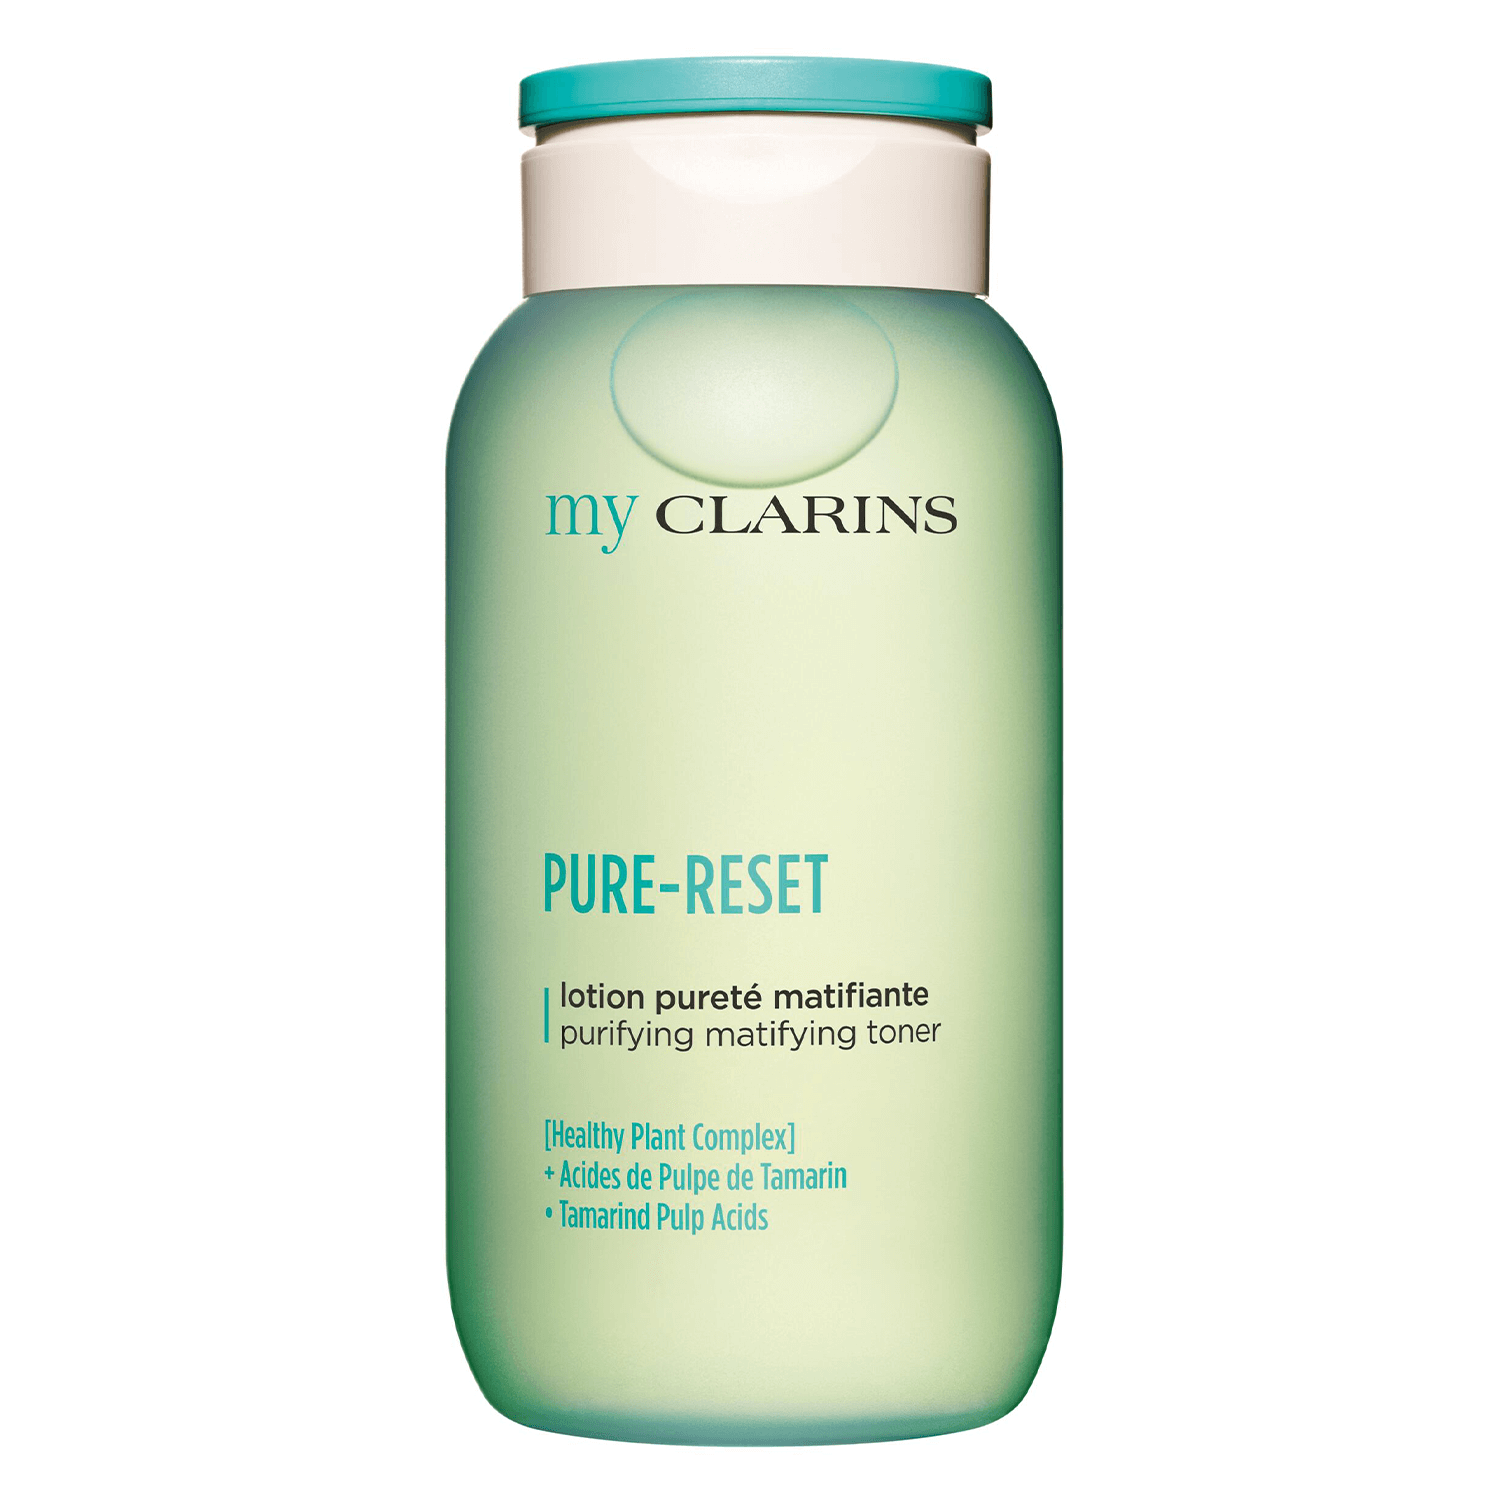 Produktbild von myClarins - PURE-RESET purifying matifying toner